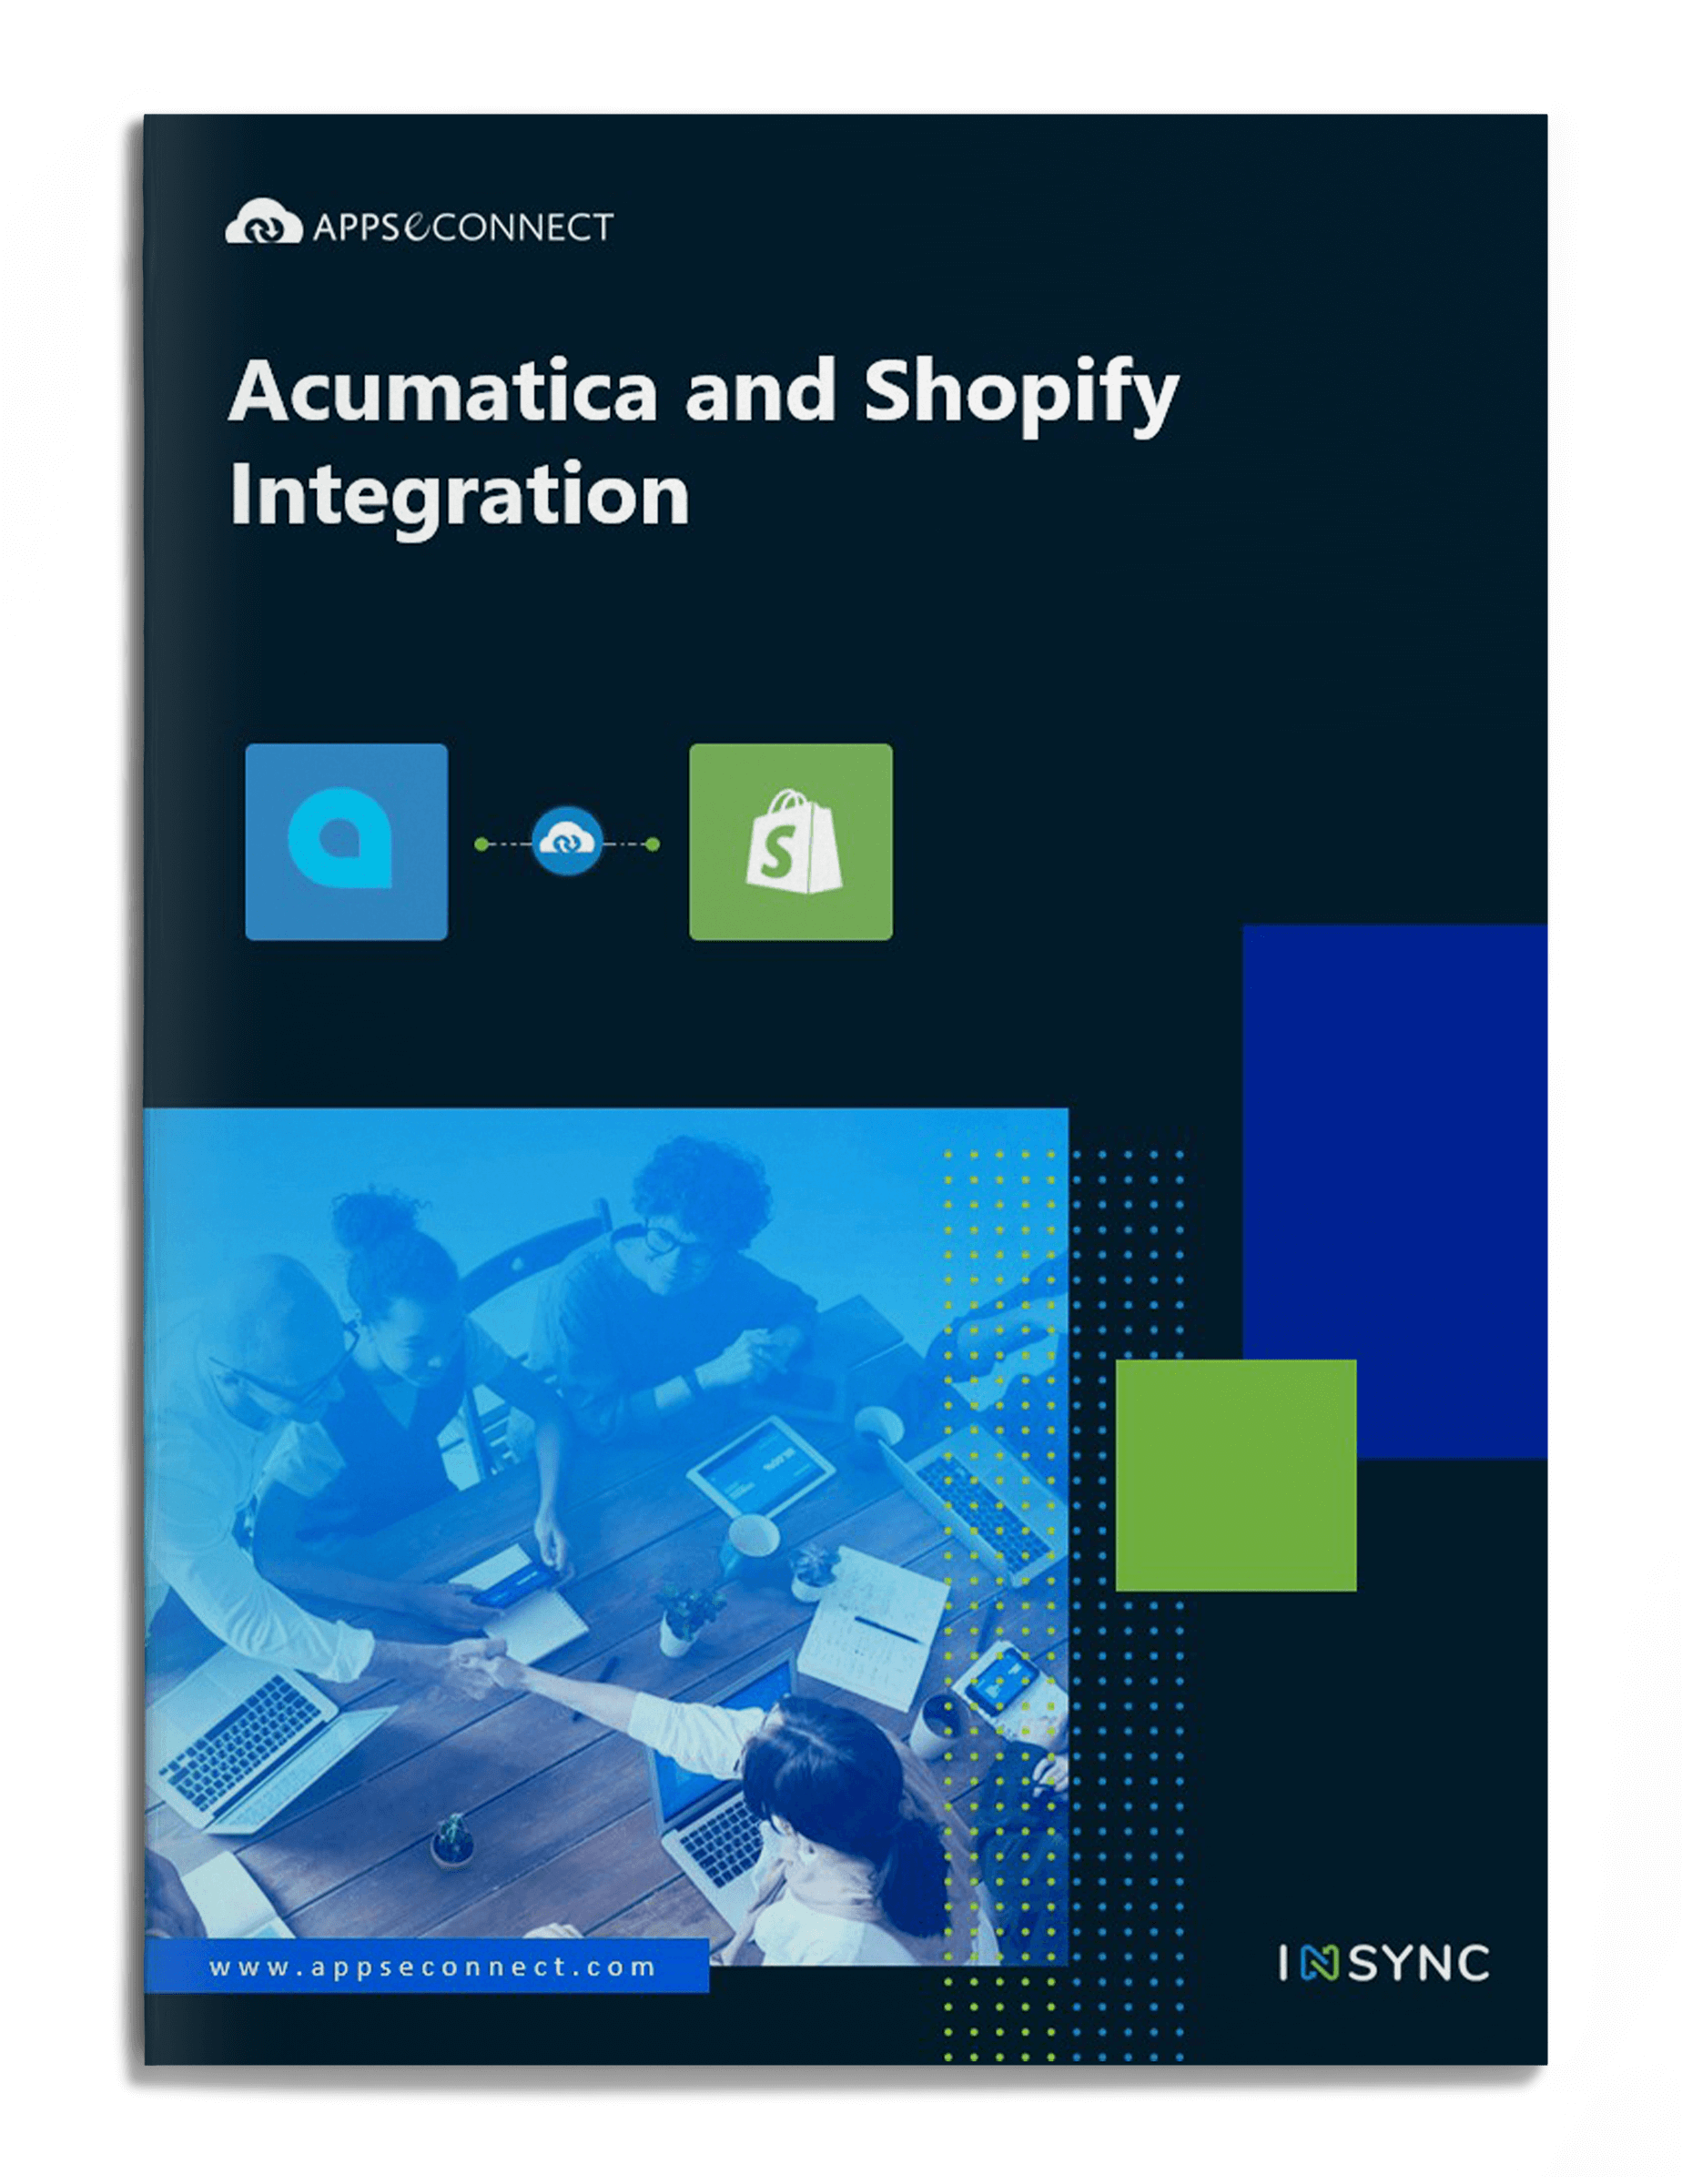 acumatica-shopify-integration-brochure-cover